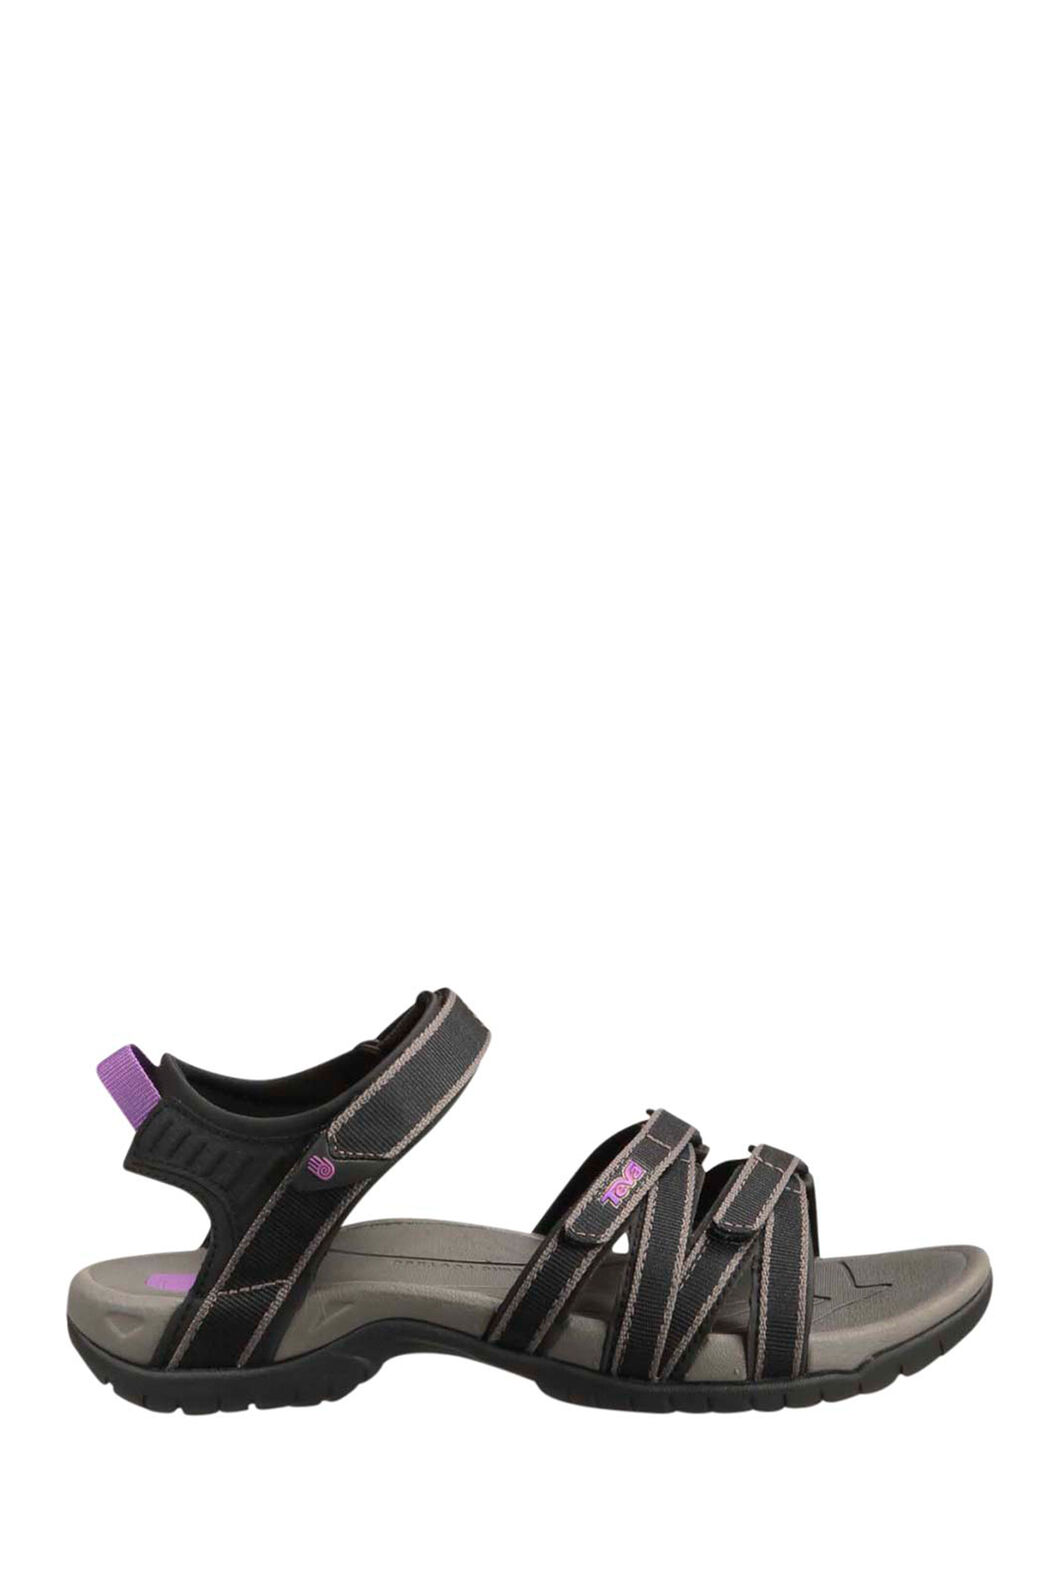 Teva Women's Tirra Sandals, Black/Grey, hi-res